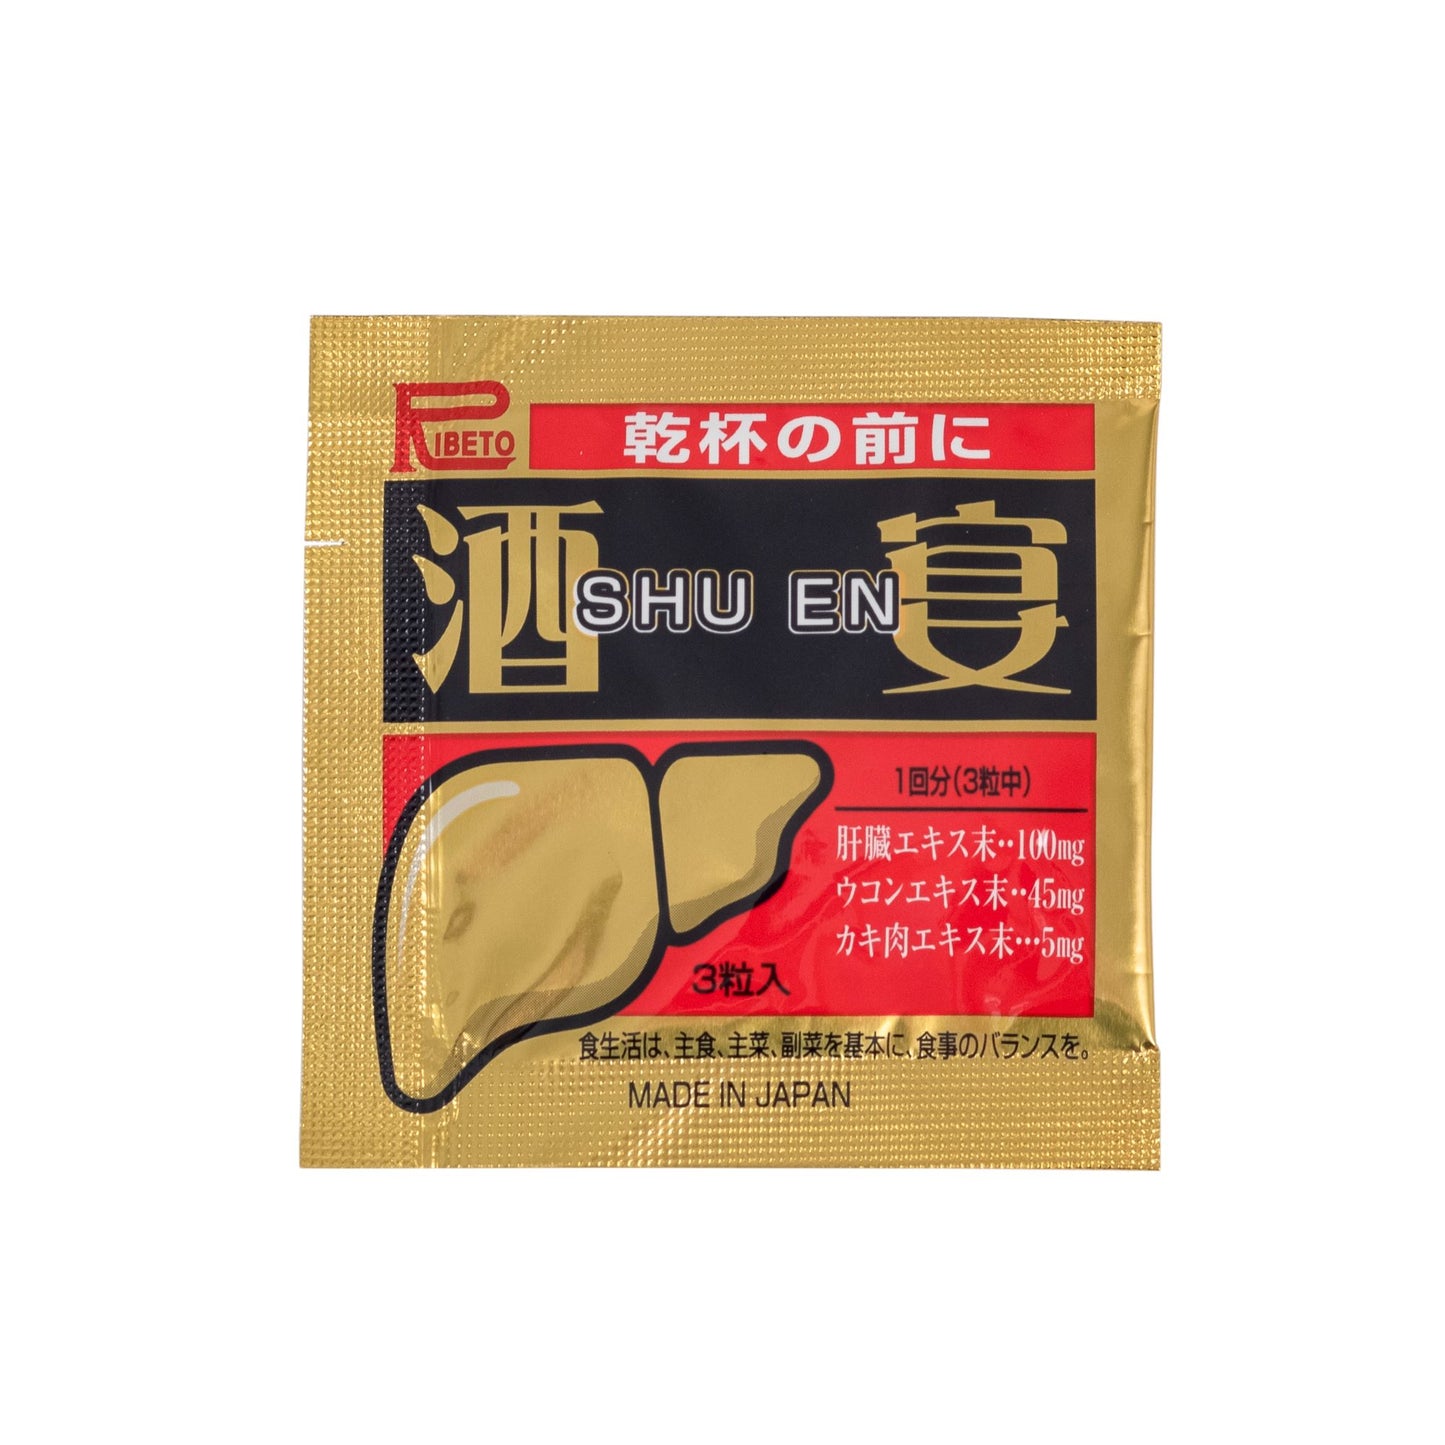 Ribeto Shoji sản phẩm phổ biến SHU EN 30 gói